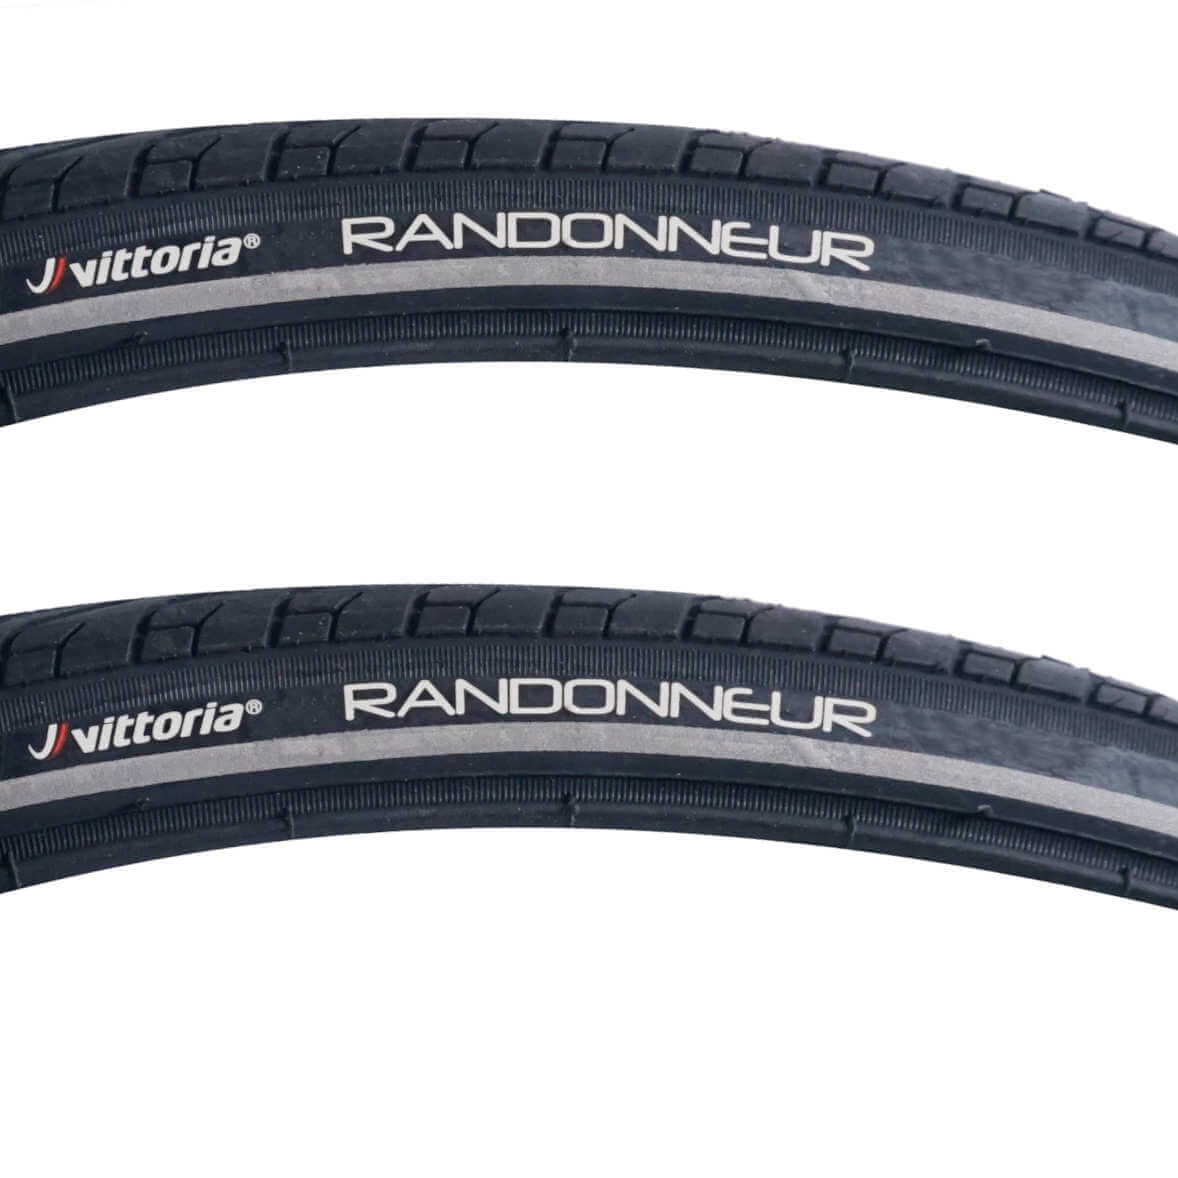 Vittoria Randonneur 700c Performance Road Tire with Reflective Strip